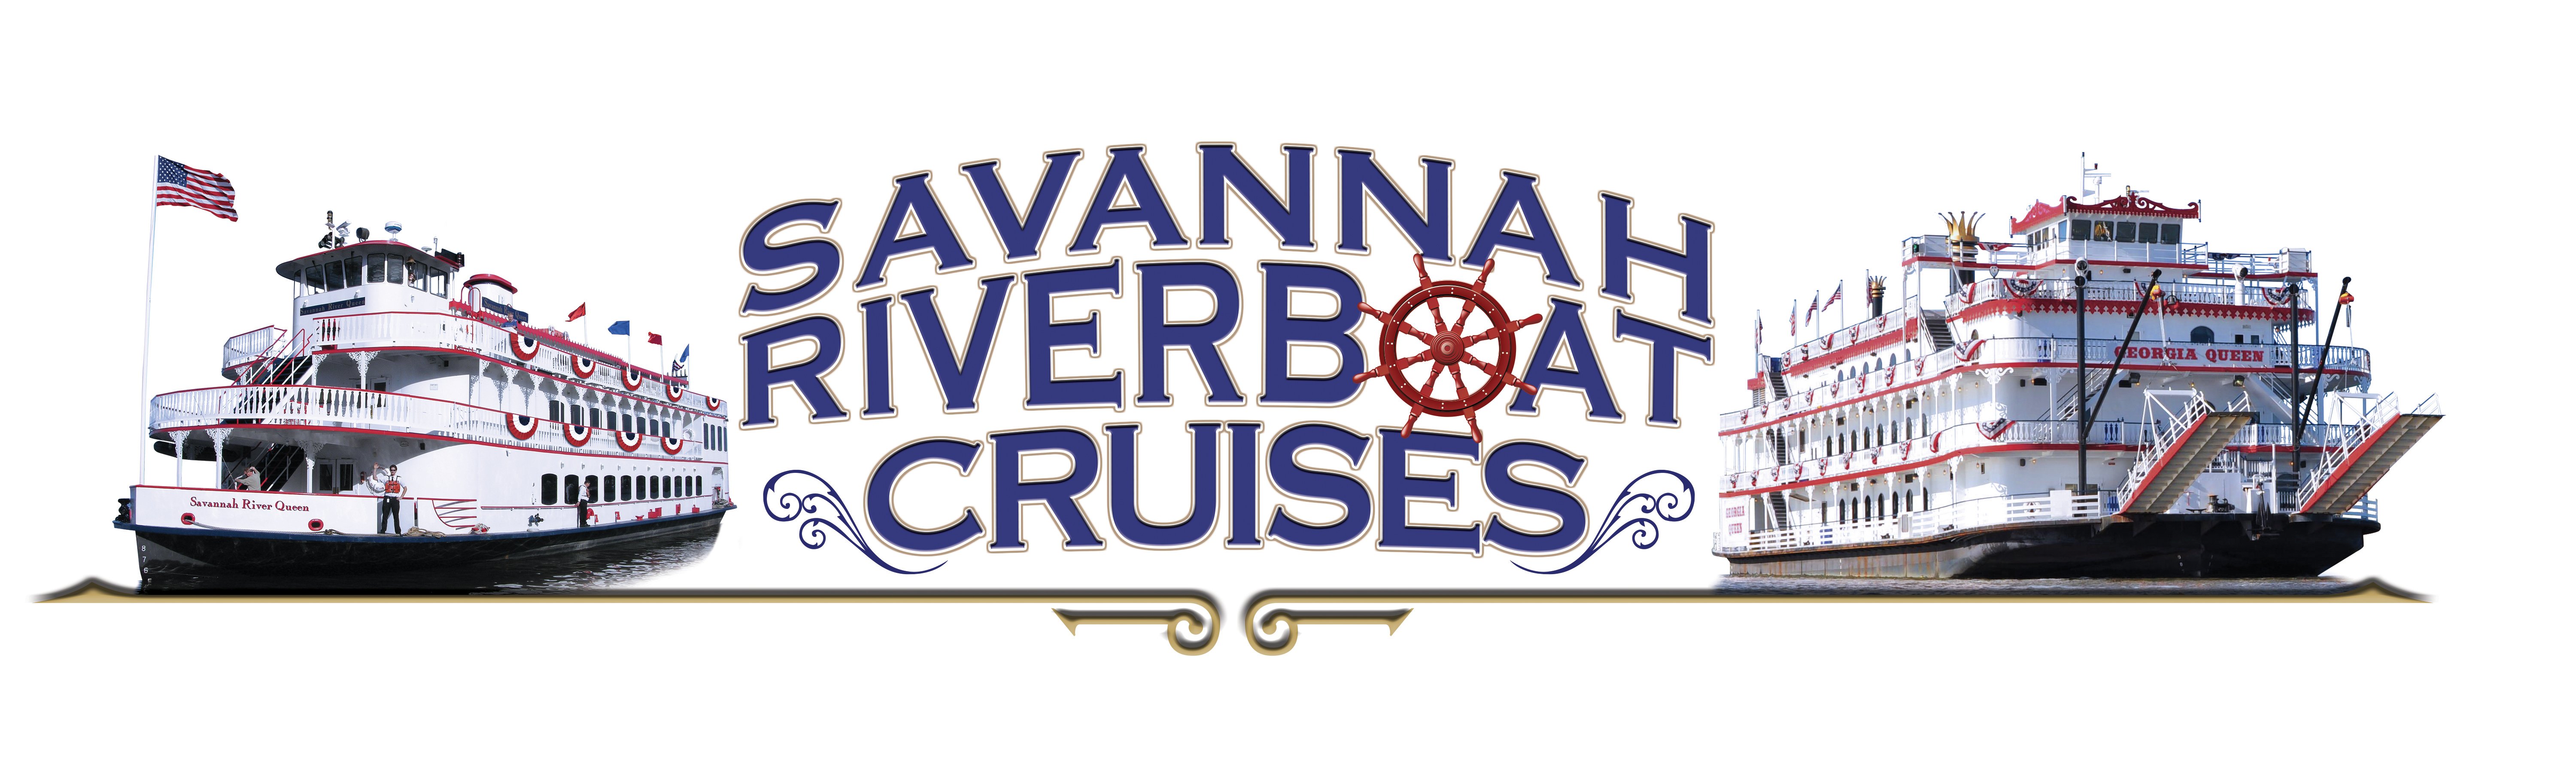 Savannah Riverboat Cruises - www.savannahriverboat.com